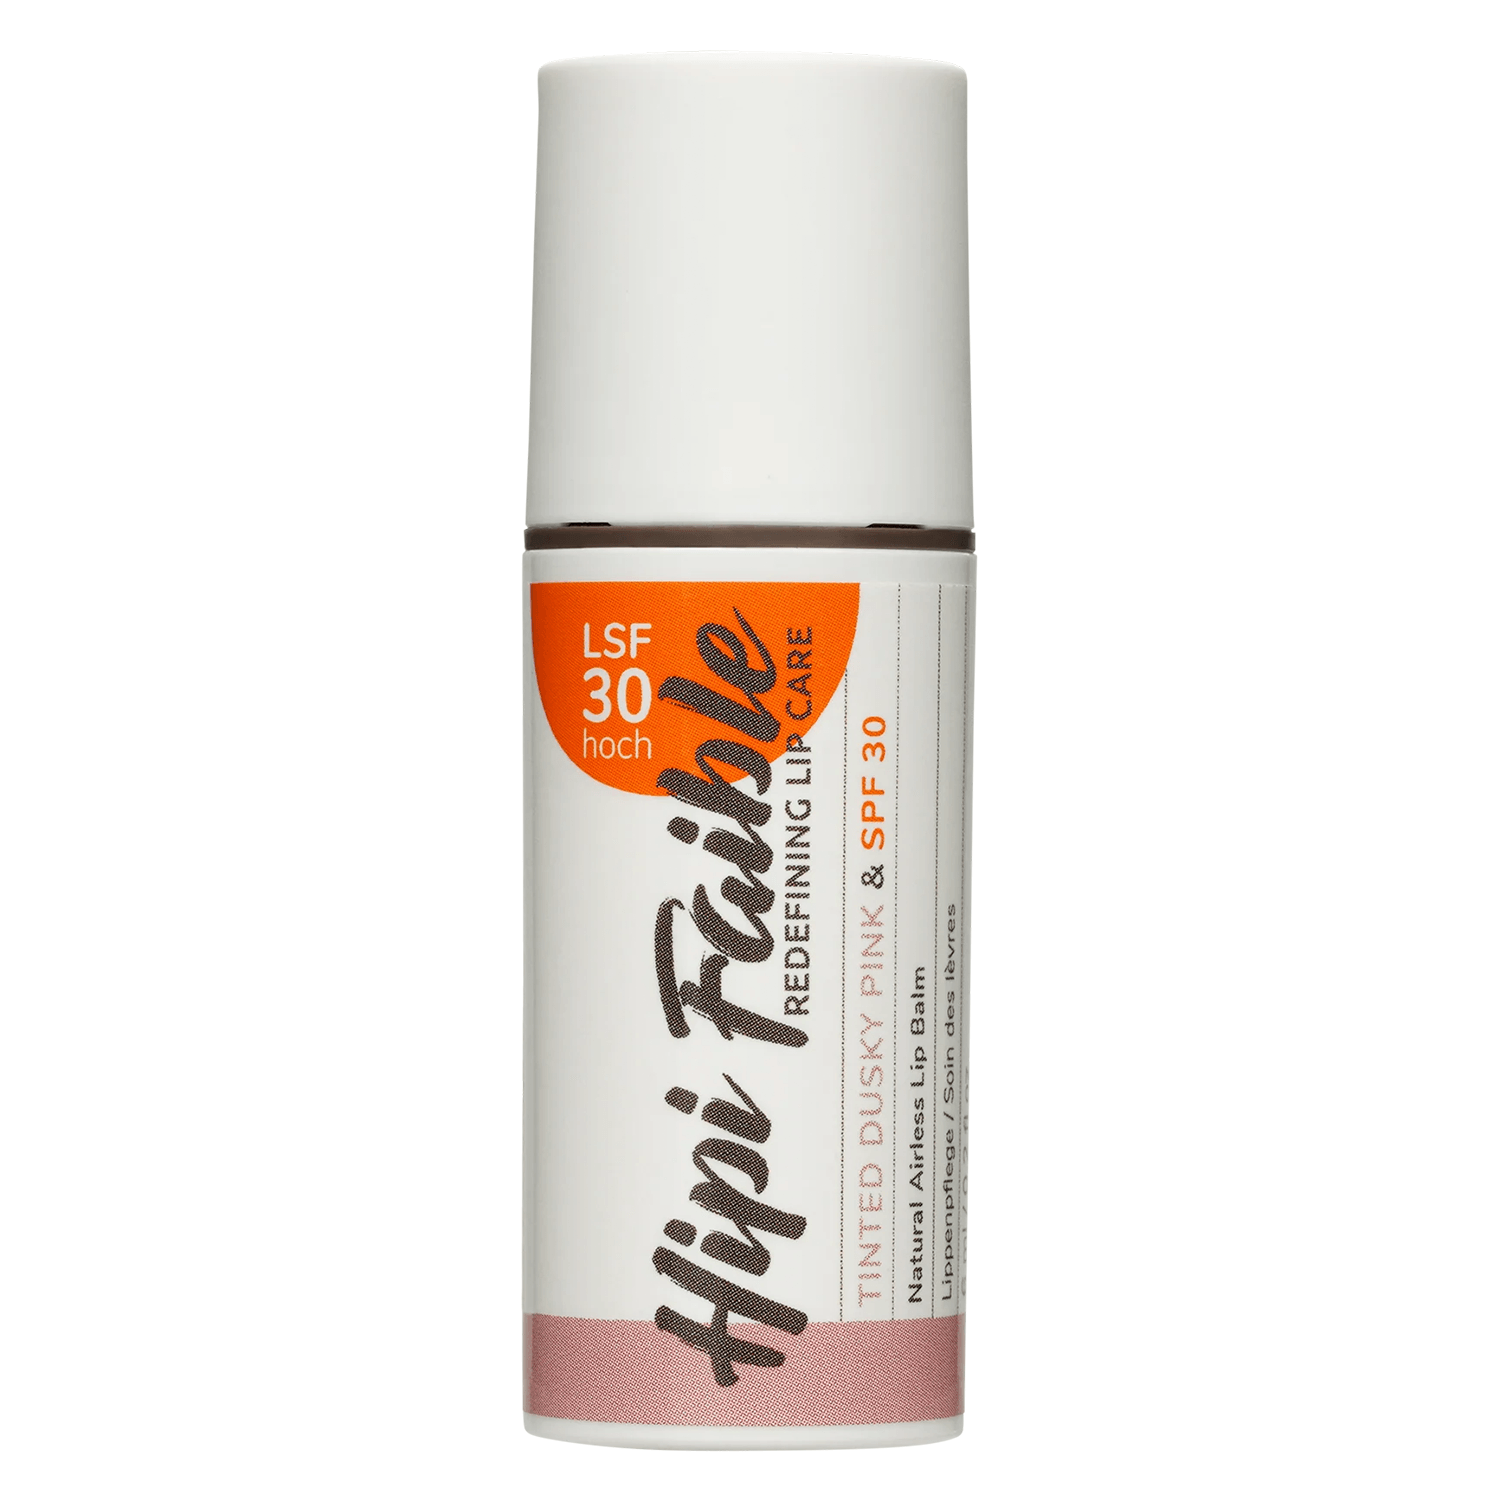 Produktbild von Hipi Faible - Lip Balm Tinted Dusky Pink & SPF 30